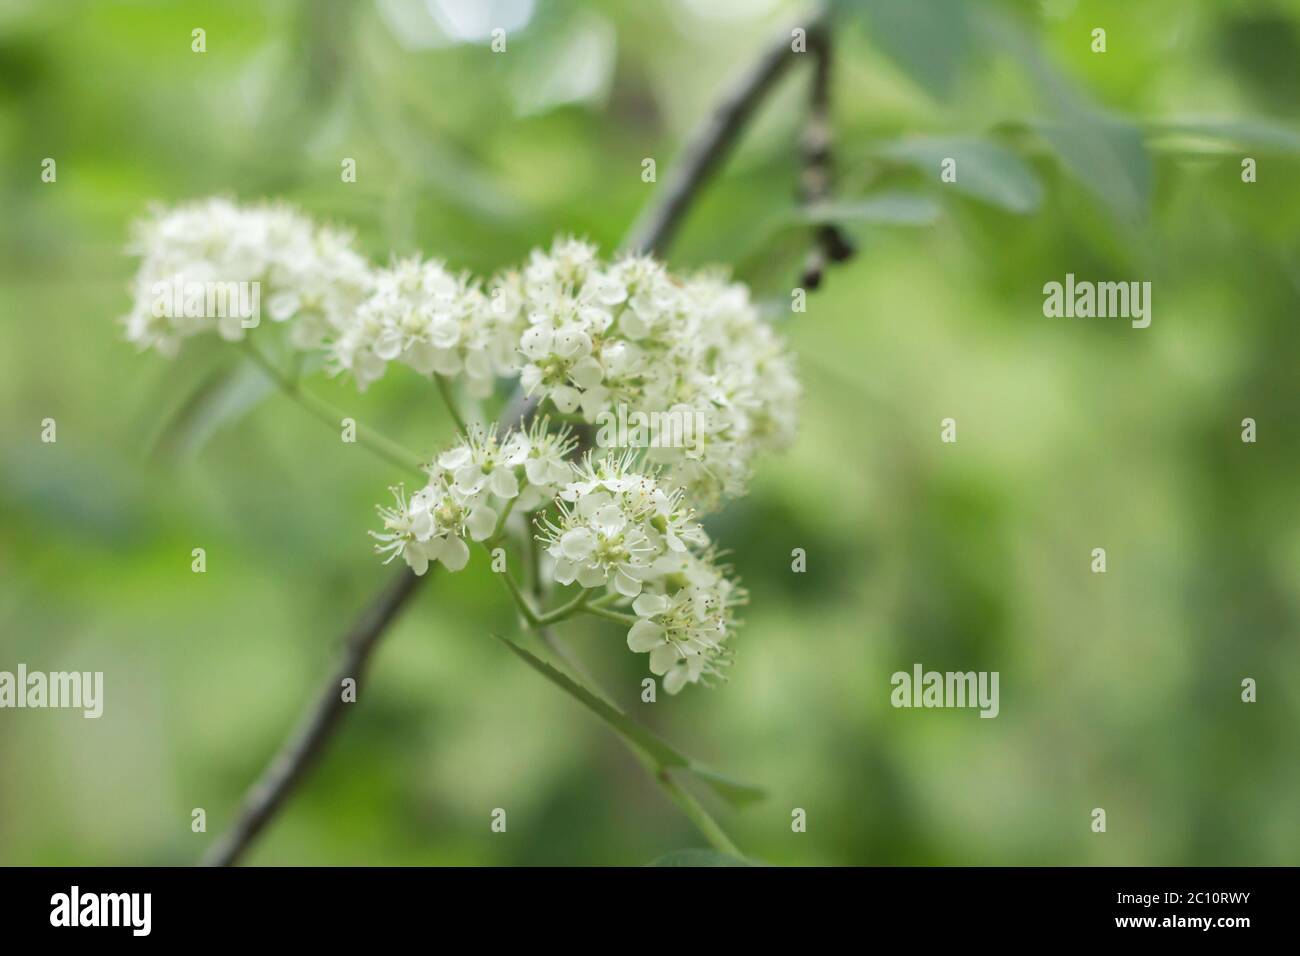 European black elder tree blooming in springtime Stock Photo - Alamy